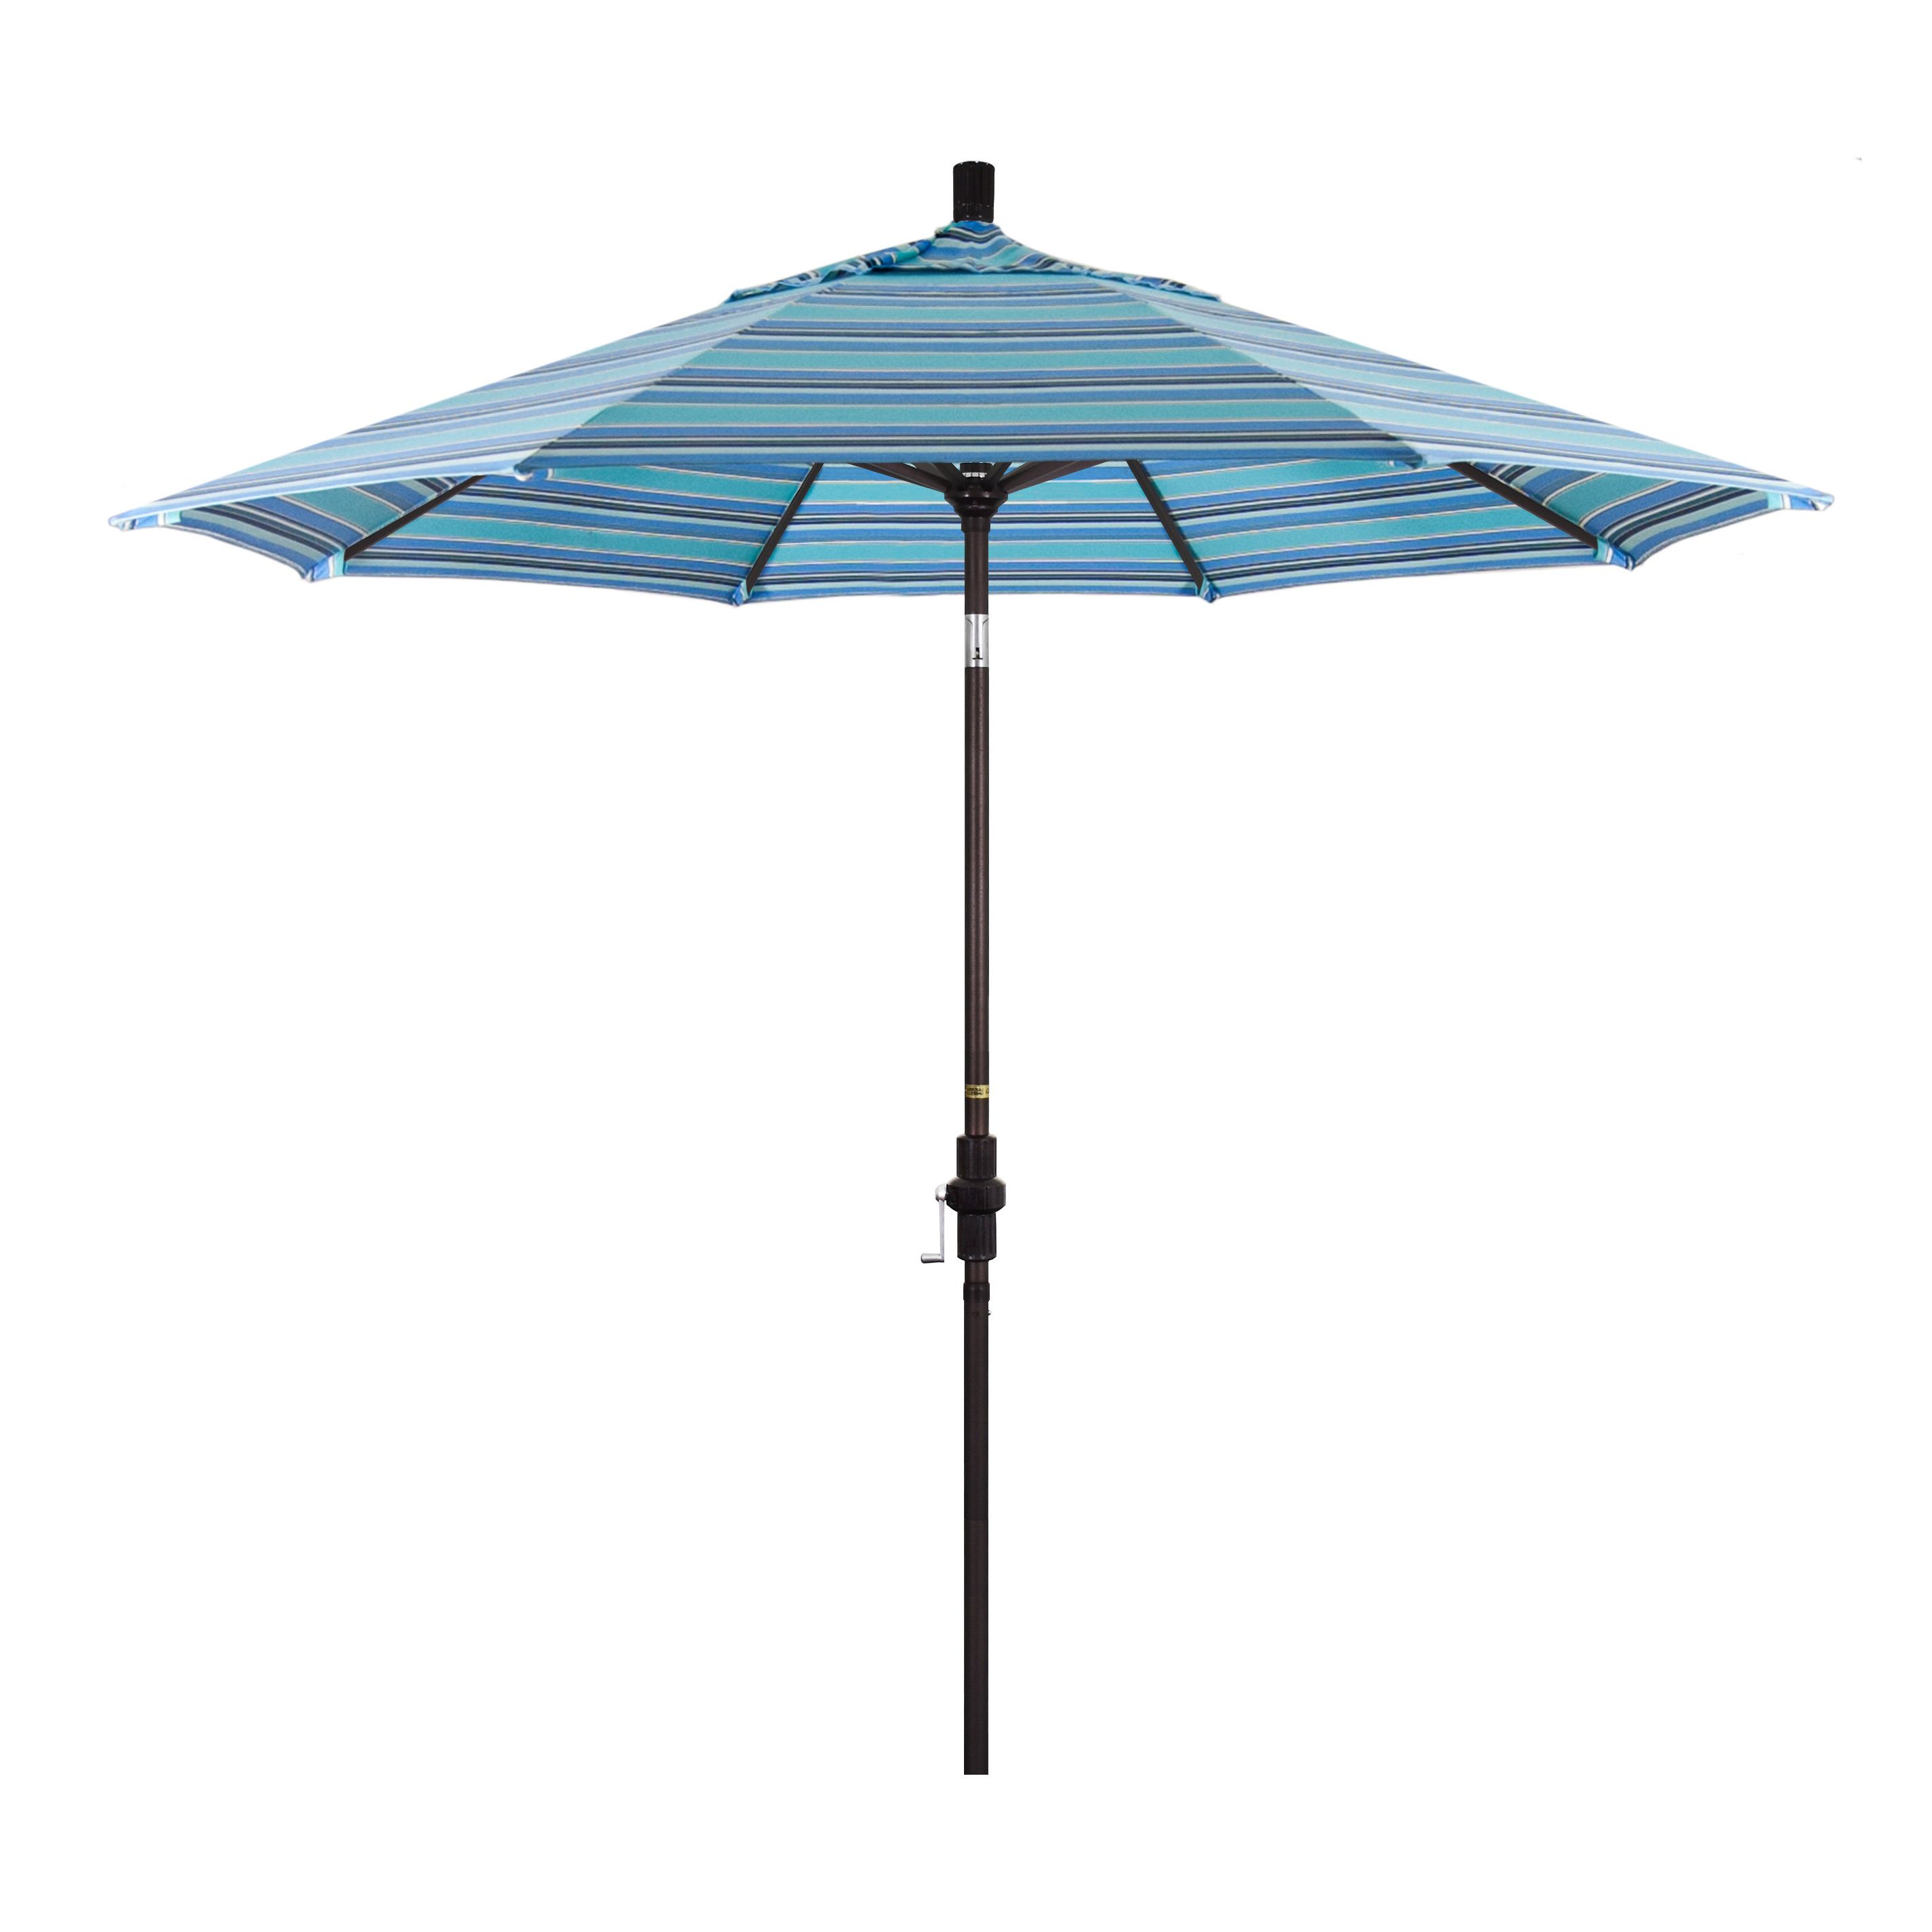 Golden State Series 9' Market Sunbrella Umbrella Regarding 2019 Caravelle Market Sunbrella Umbrellas (Photo 6 of 20)